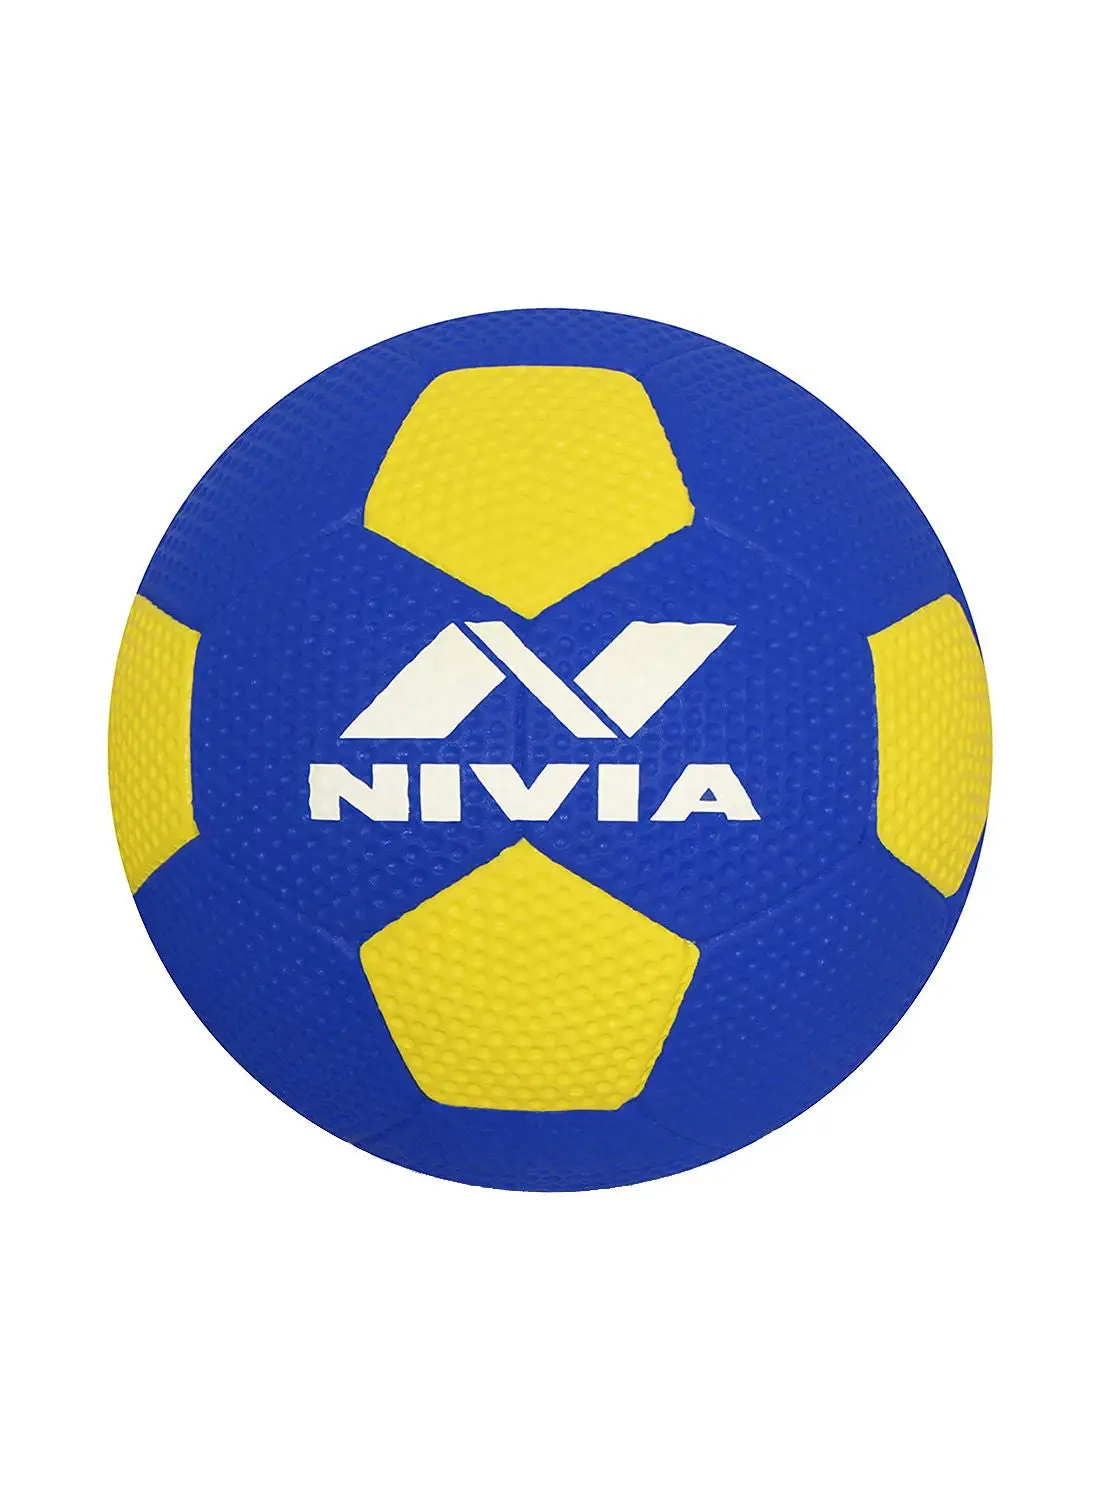 Nivia Tornado Moulded Football Size-5 Rubber